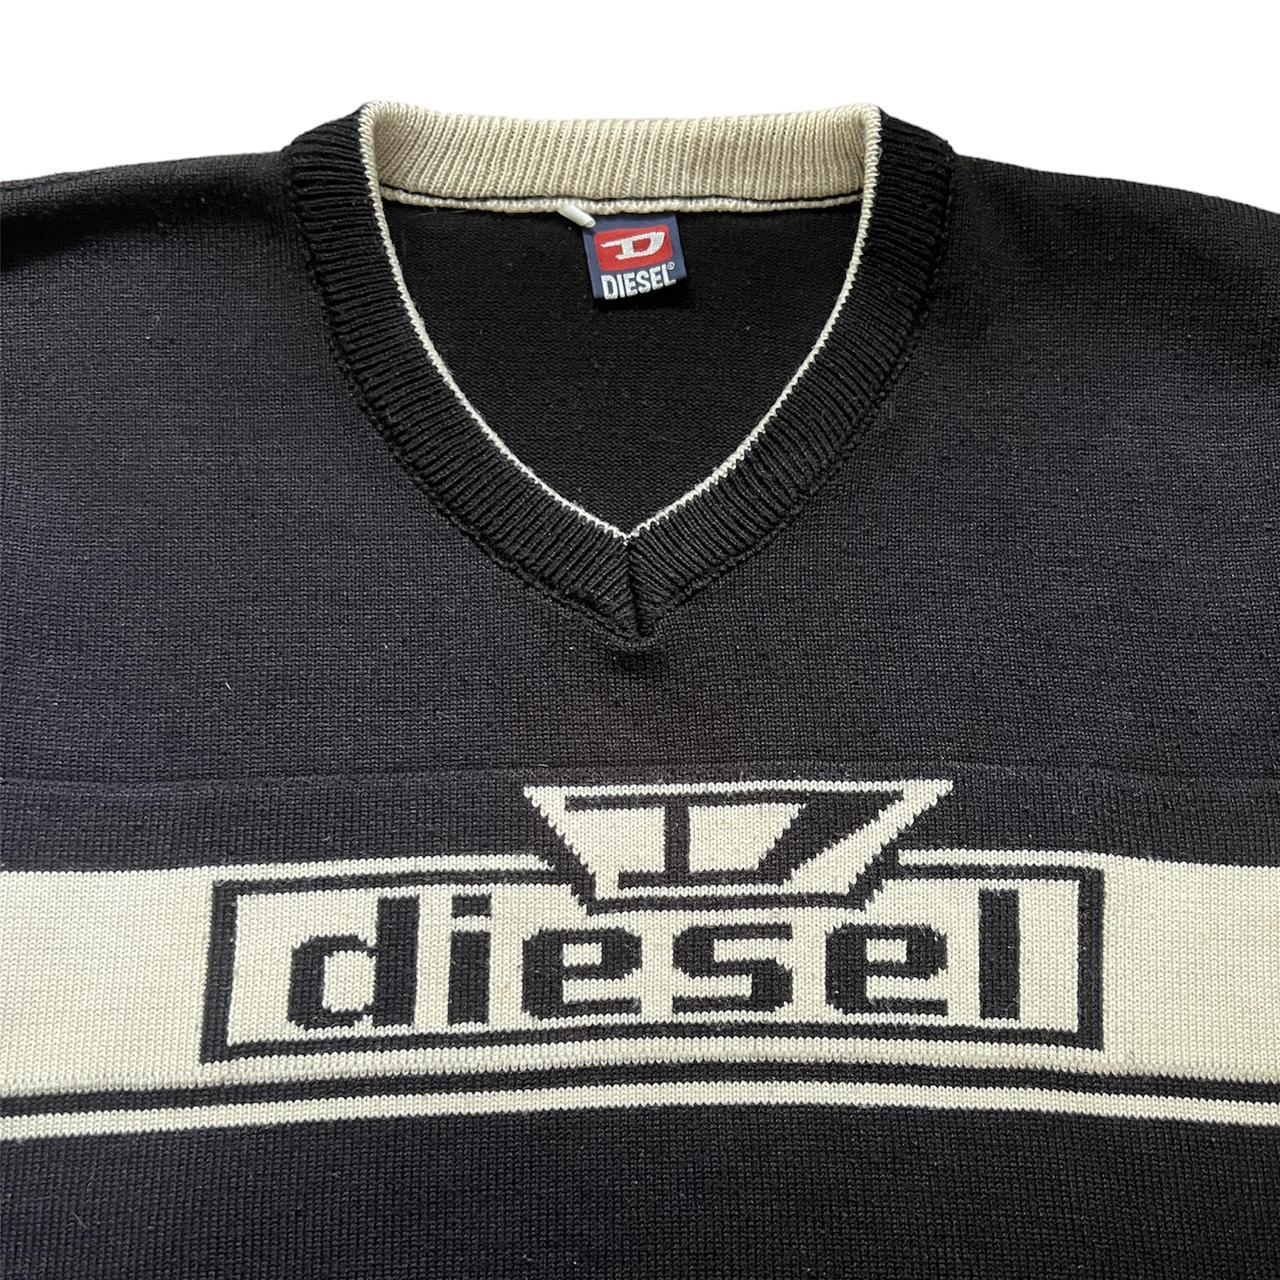 diesel jumper knit spell out // size medium // open... - Depop